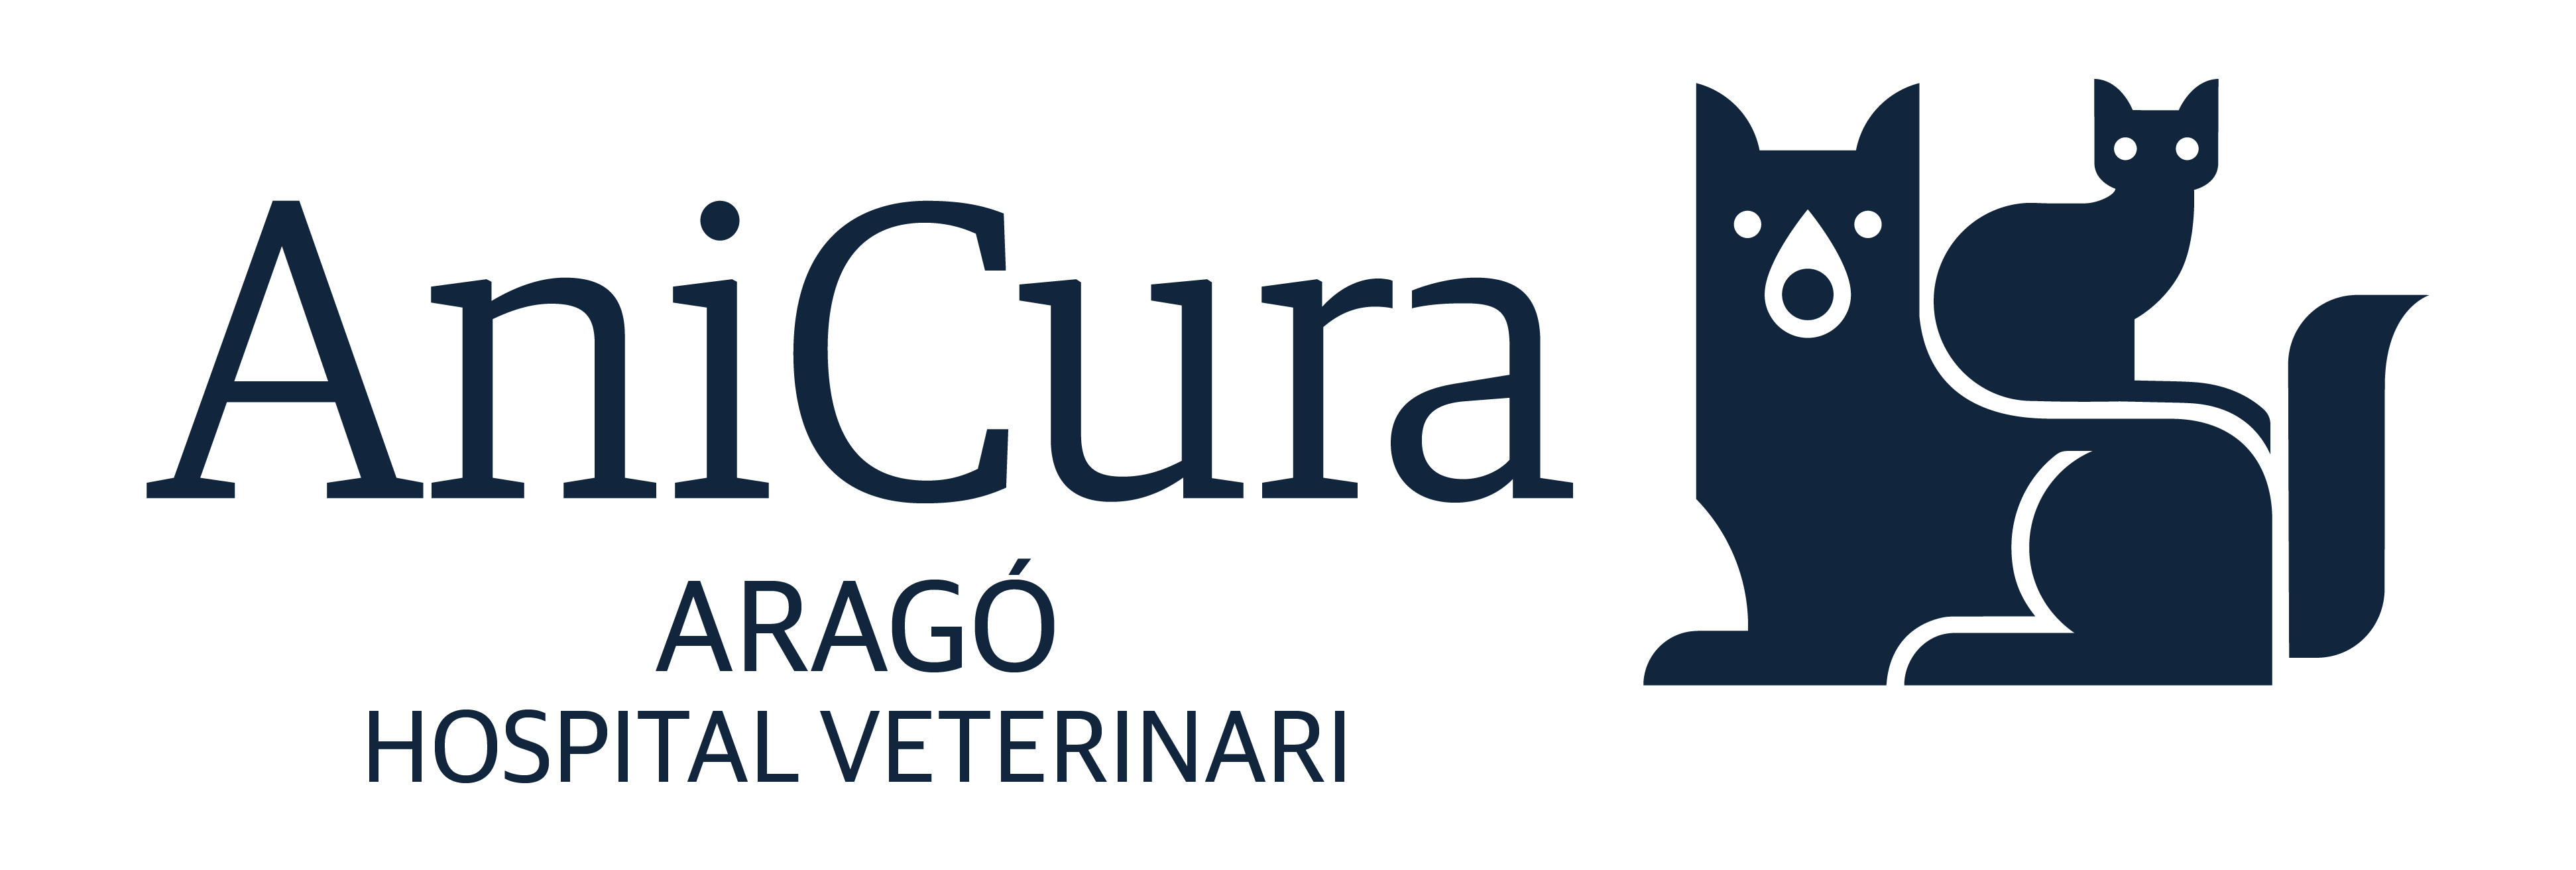 AniCura Aragó Hospital Veterinari logo